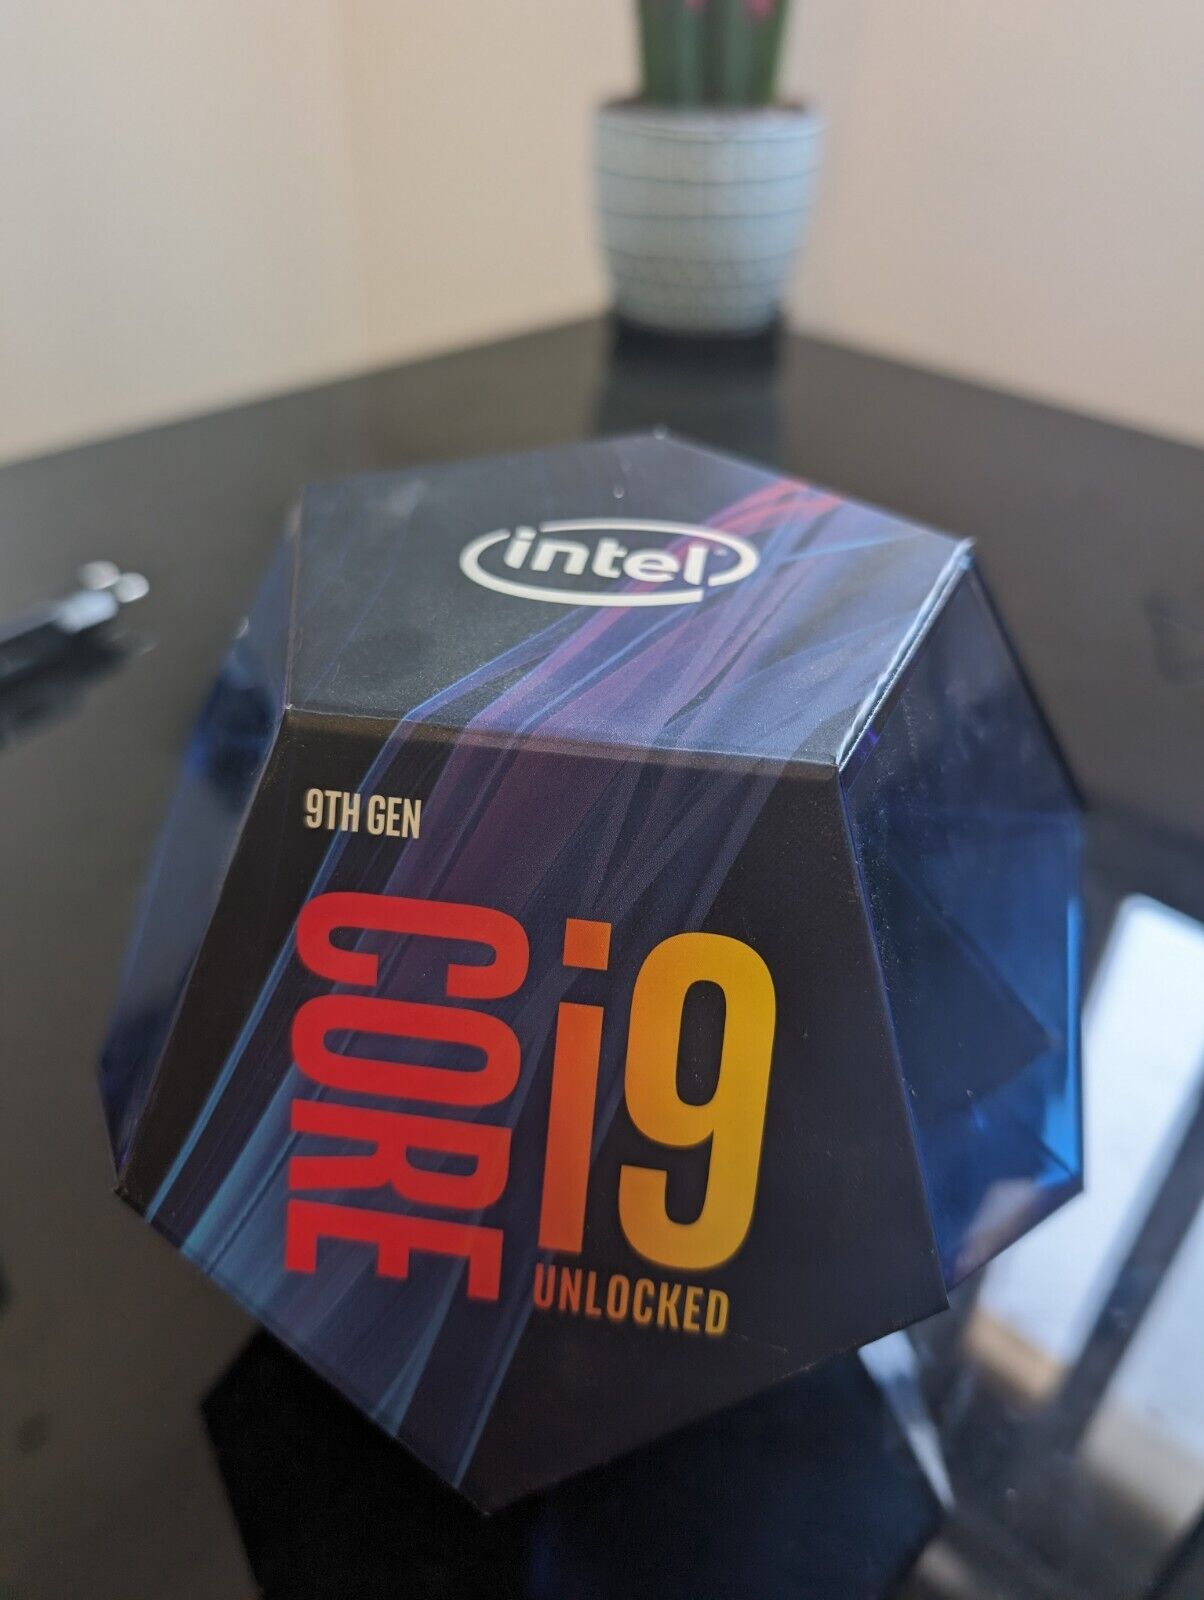 Intel i9-9900K *BOX ONLY* With Original i9 Sticker